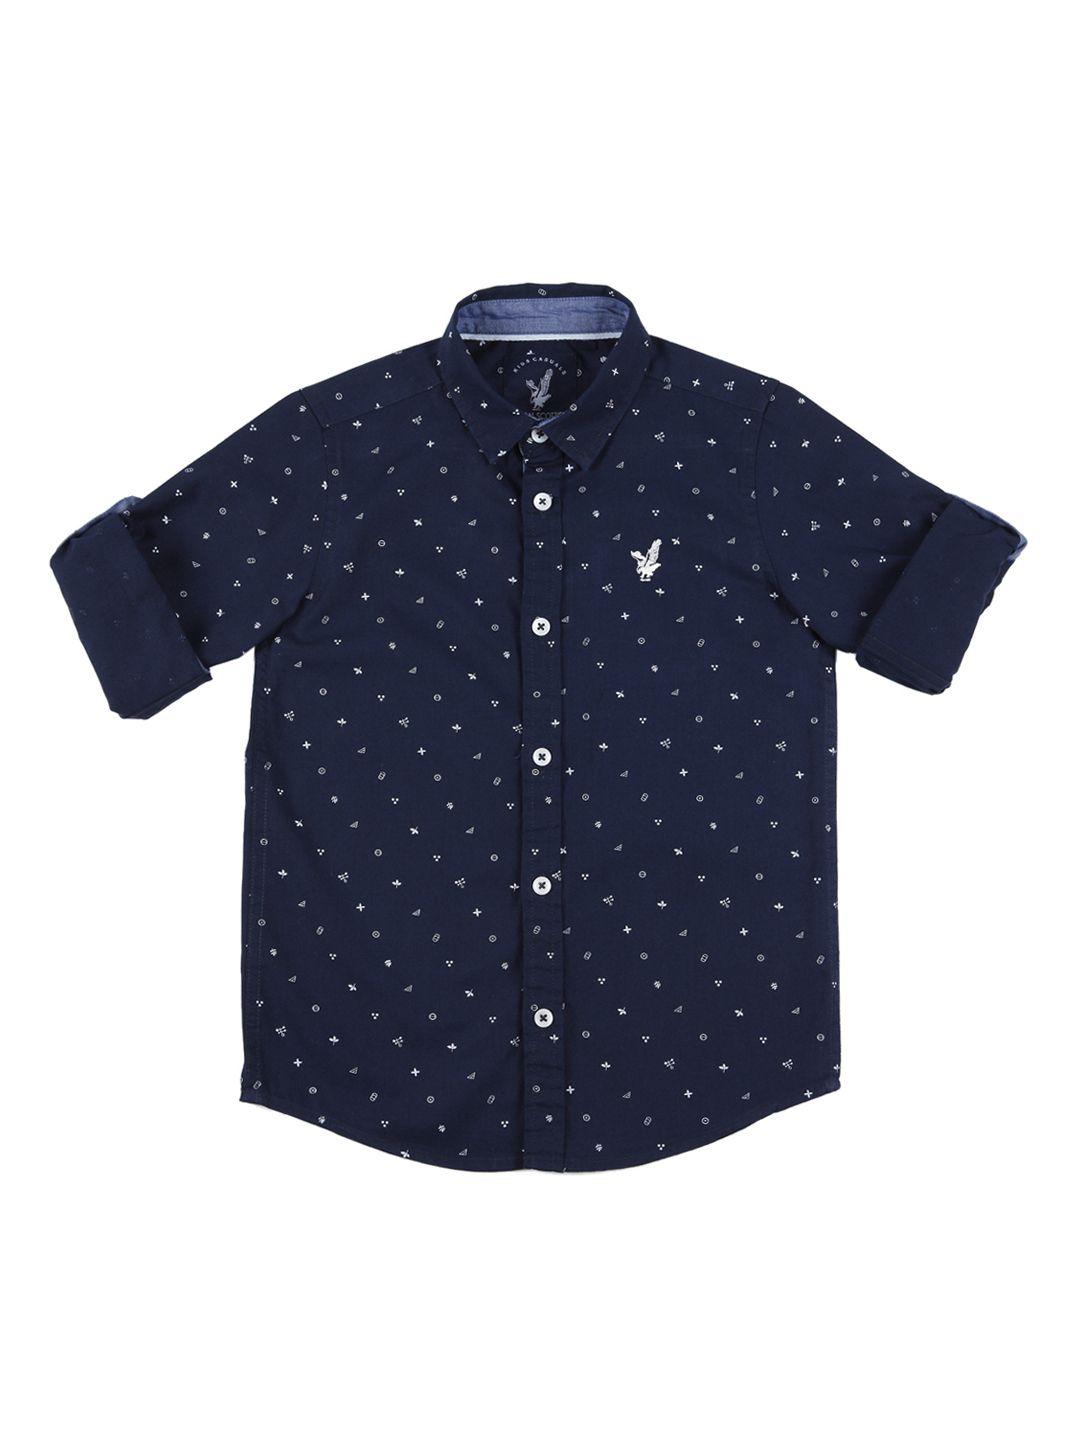 urban scottish boys navy blue standard regular fit printed casual shirt